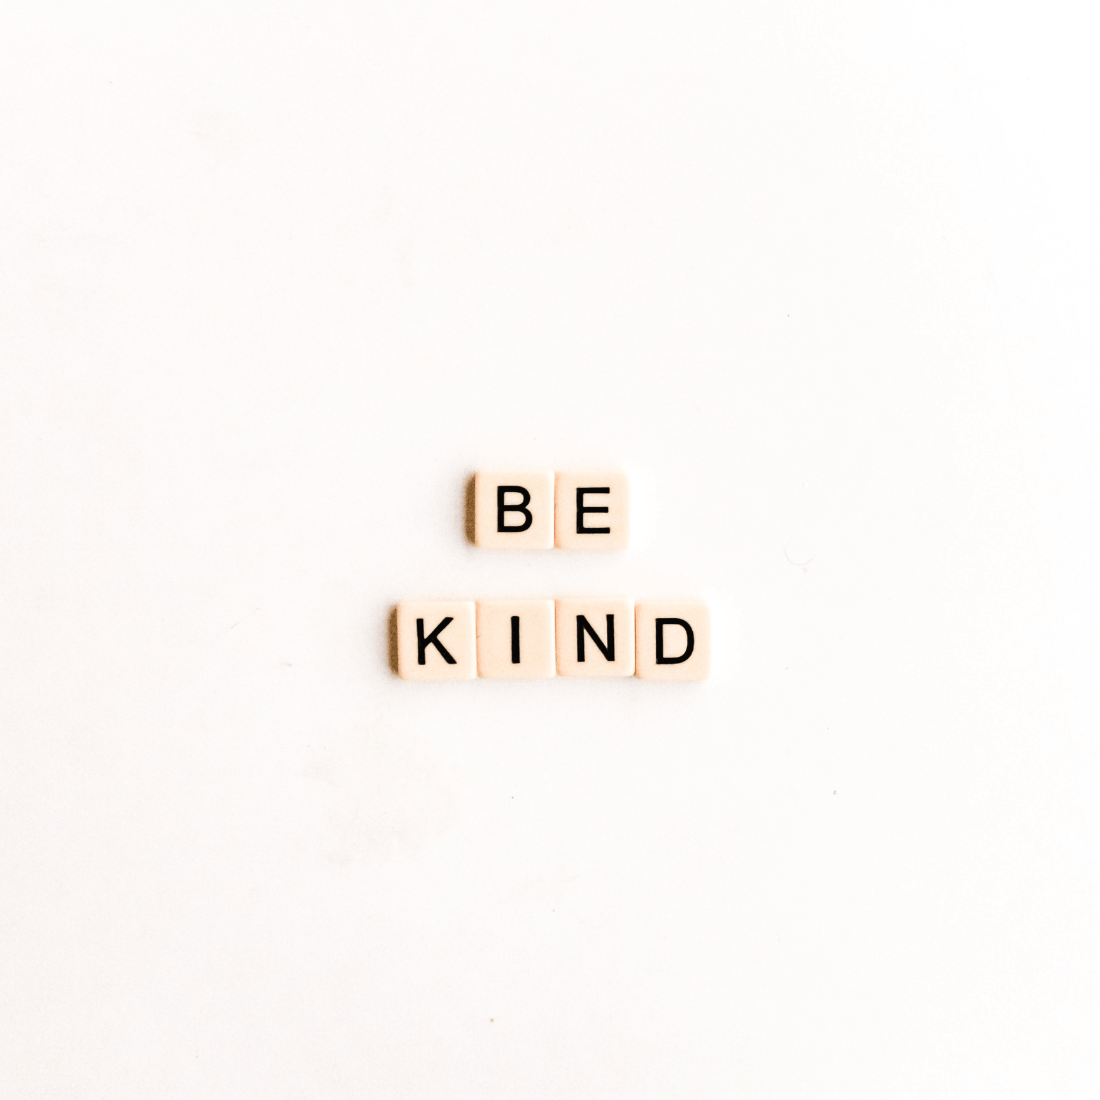 Skin Strong Australia Blog On Kindness - Kindness is Free